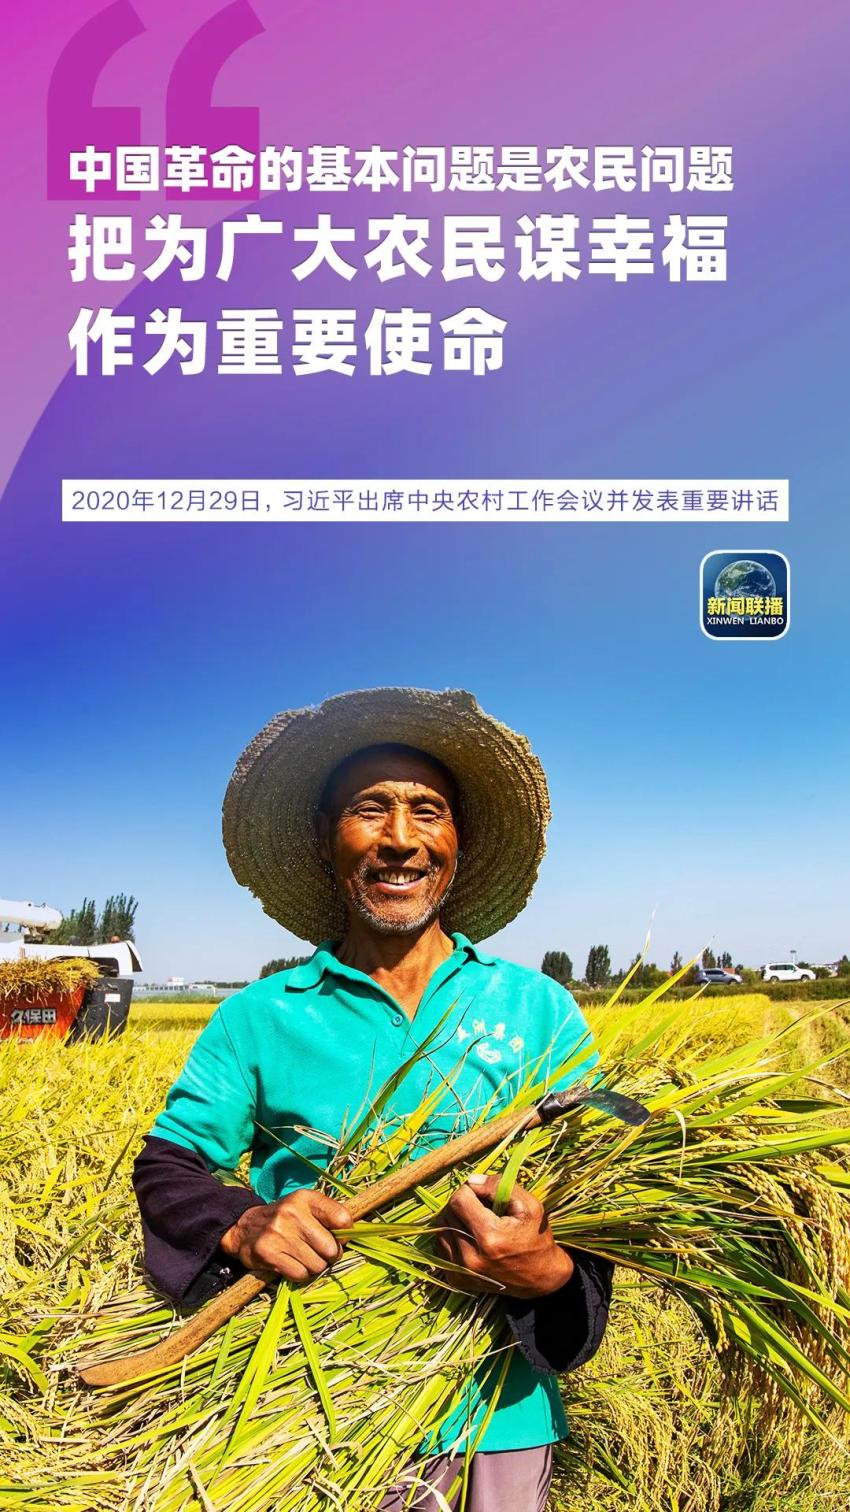 Presiden Xi Jinping Perhatikan Masalah Pedesaan